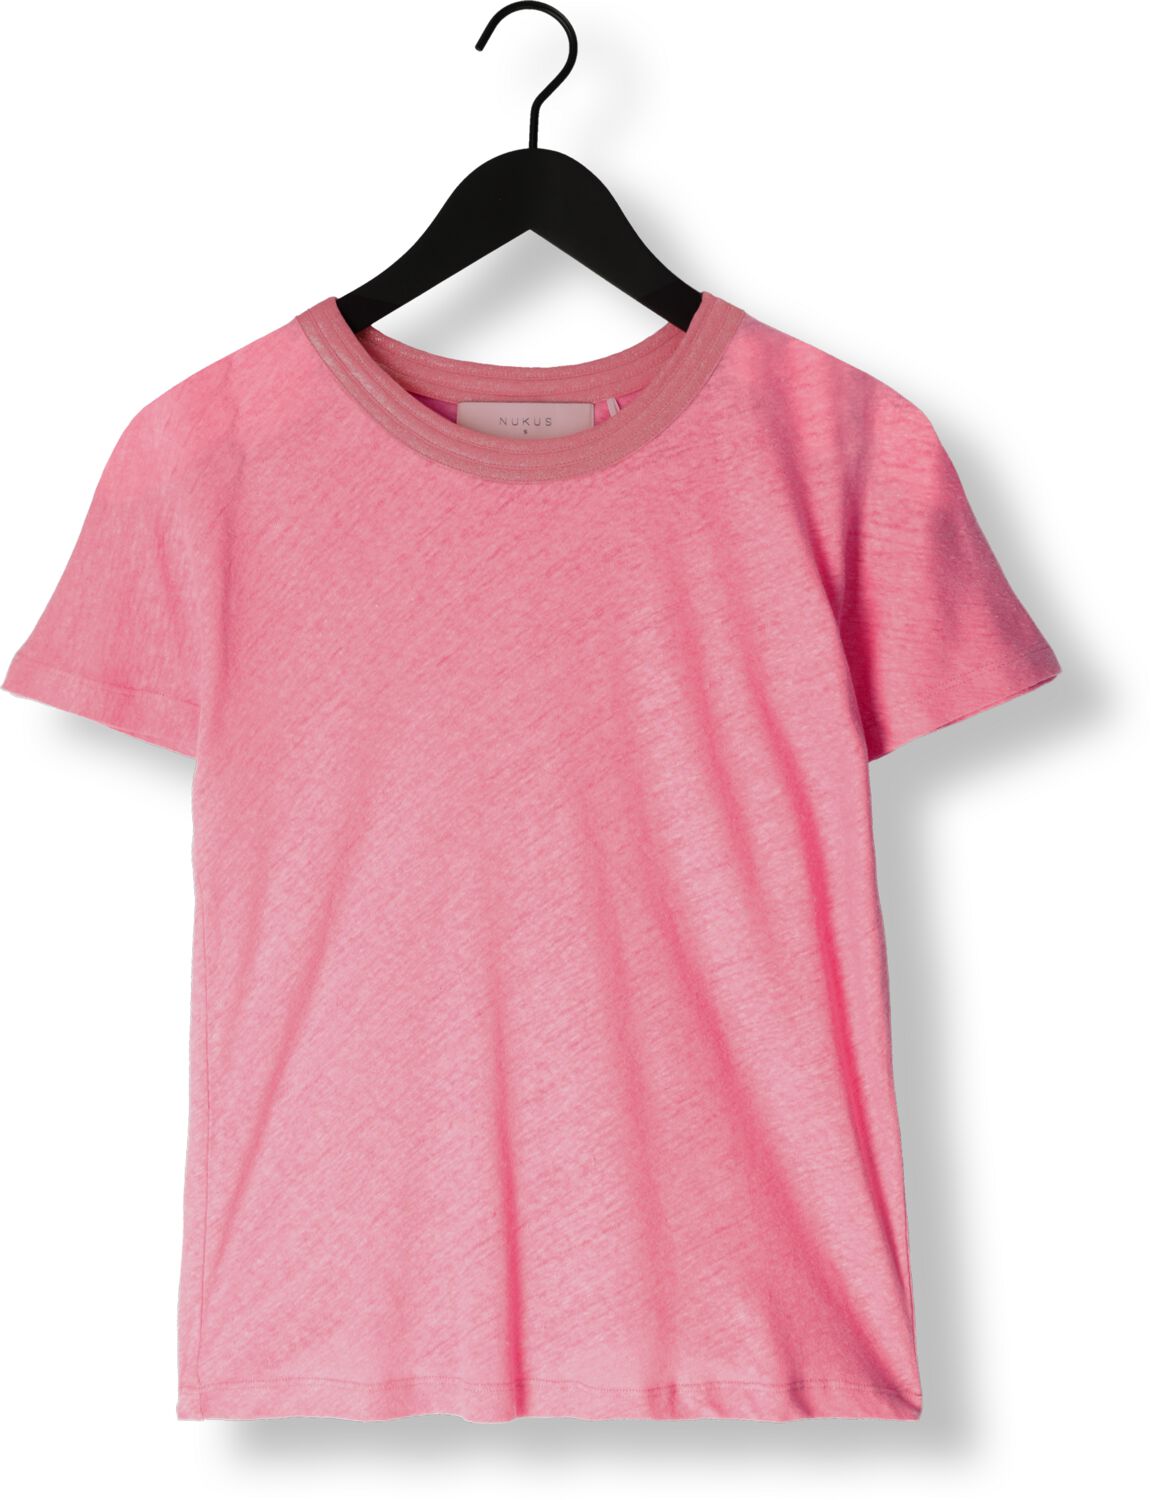 NUKUS Dames Tops & T-shirts Secchia Top Pink Roze